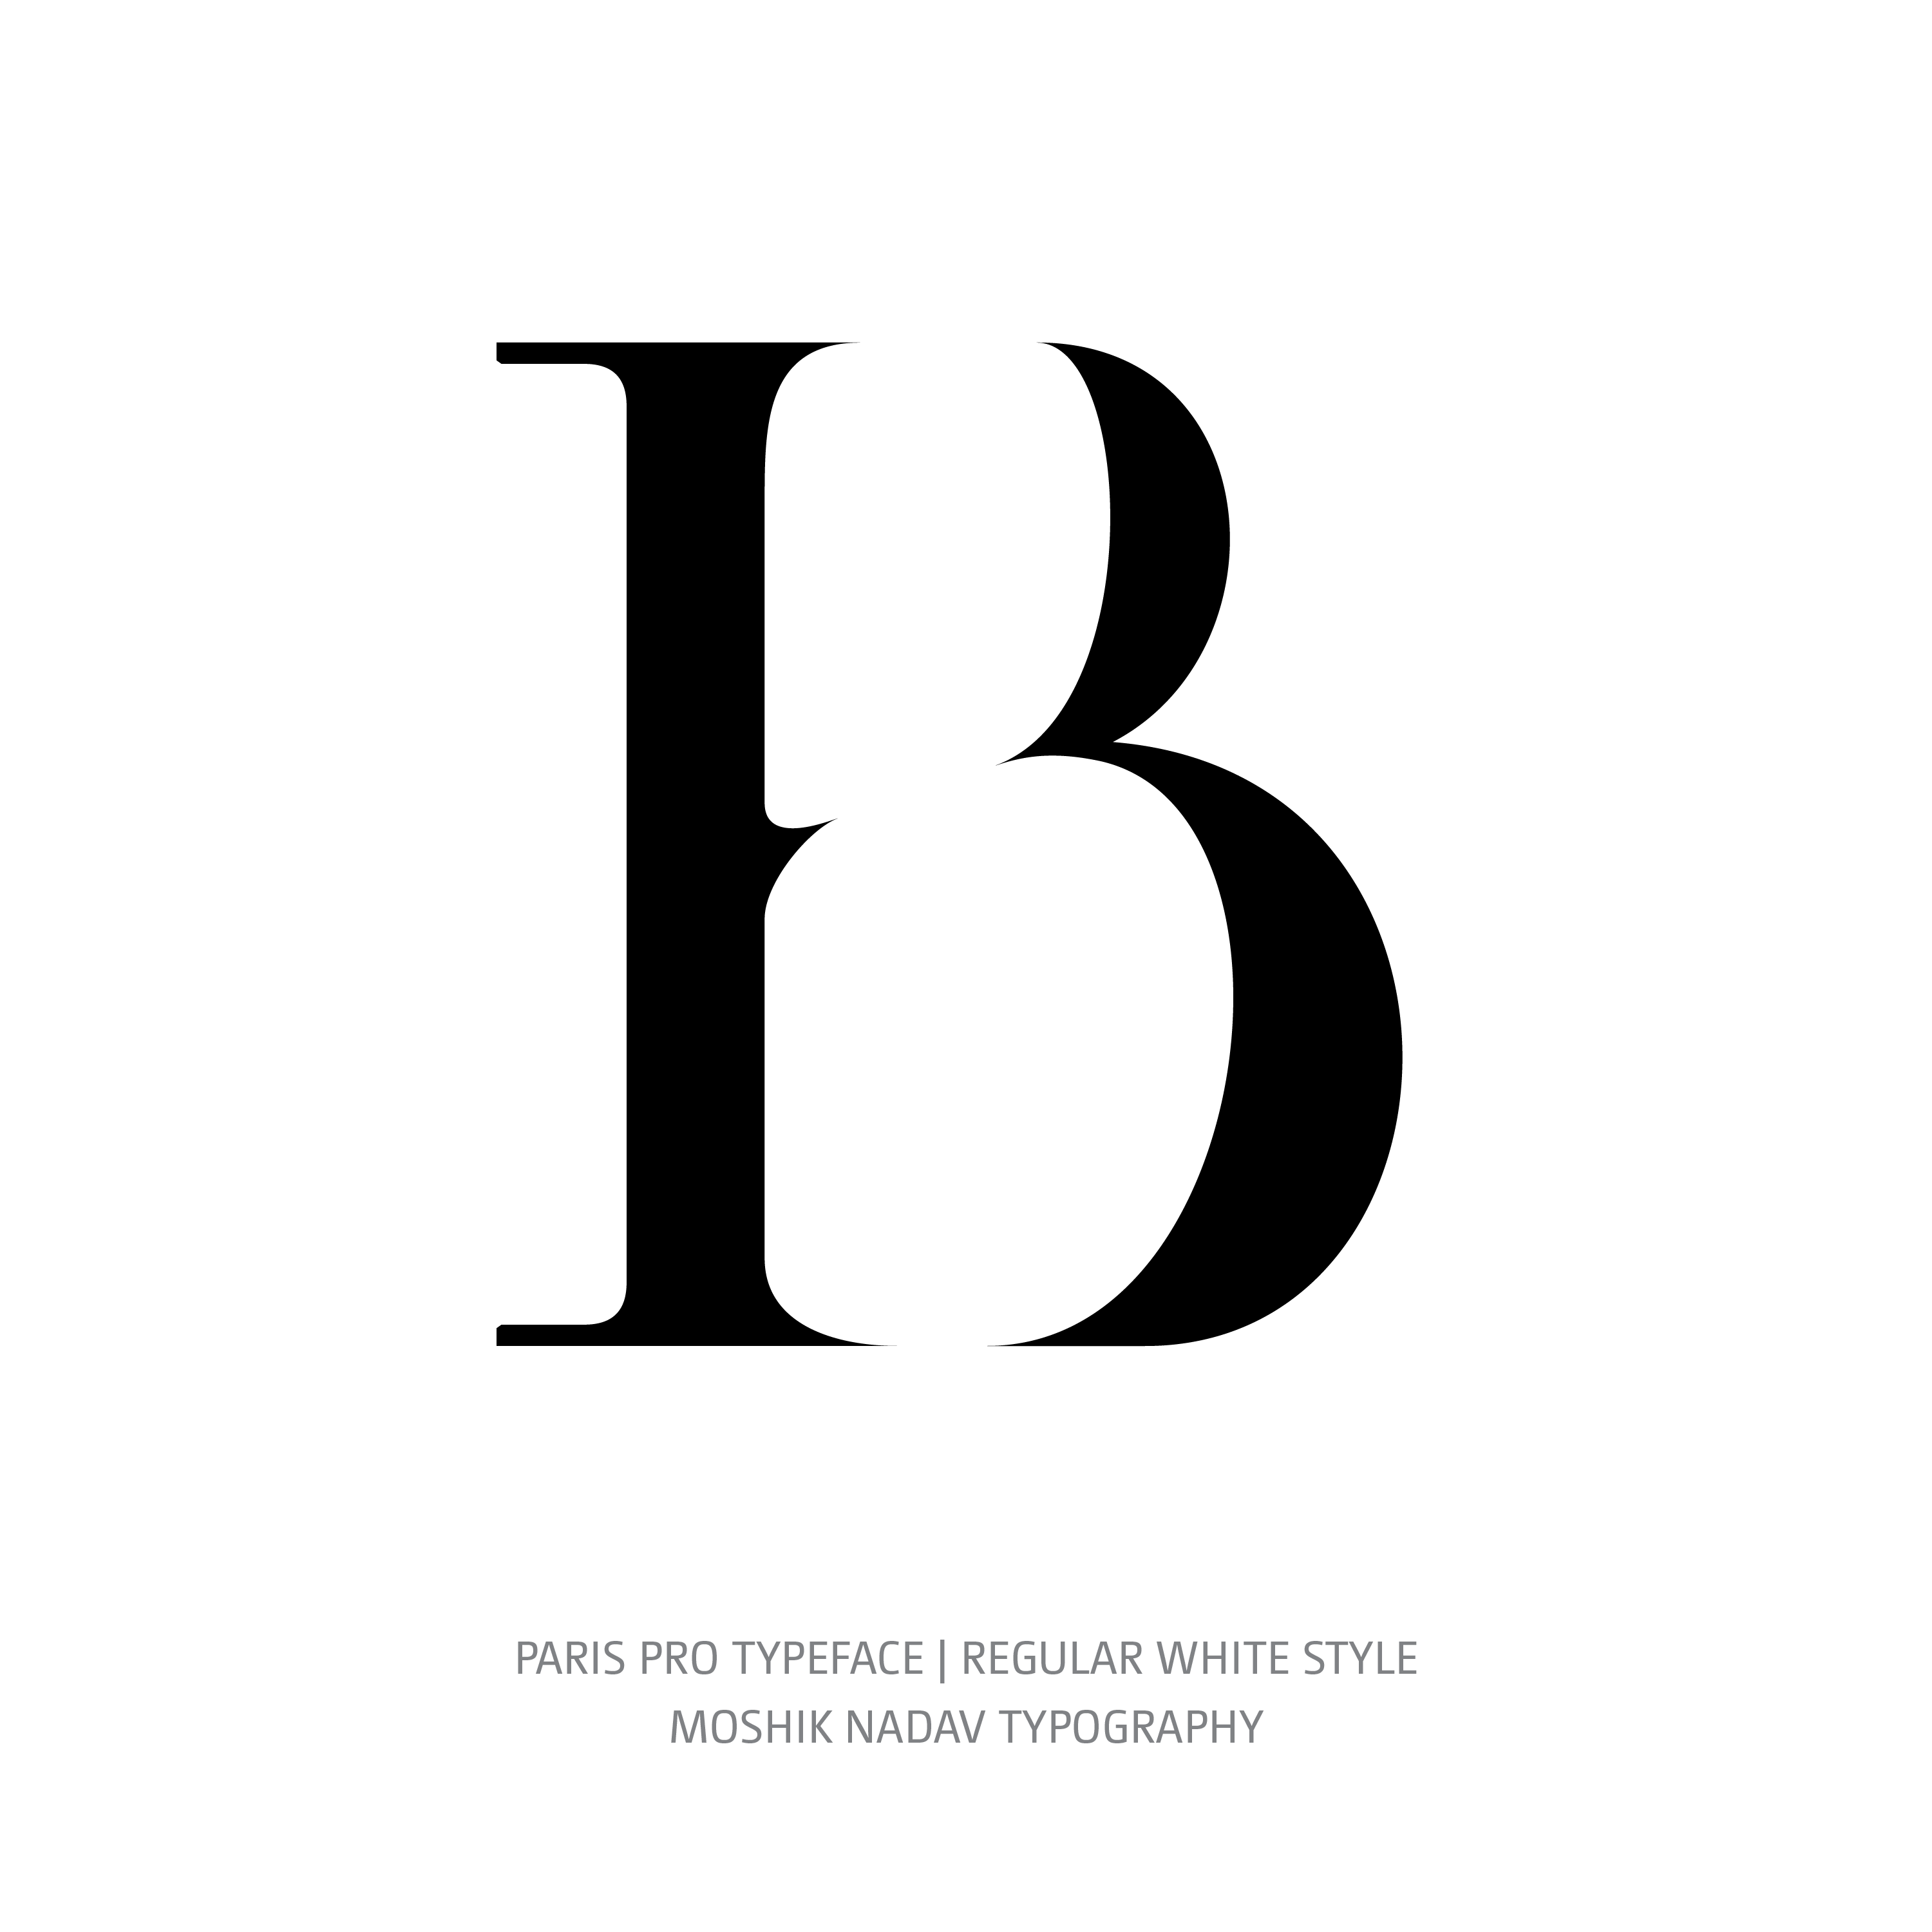 Paris Pro Typeface Regular White B